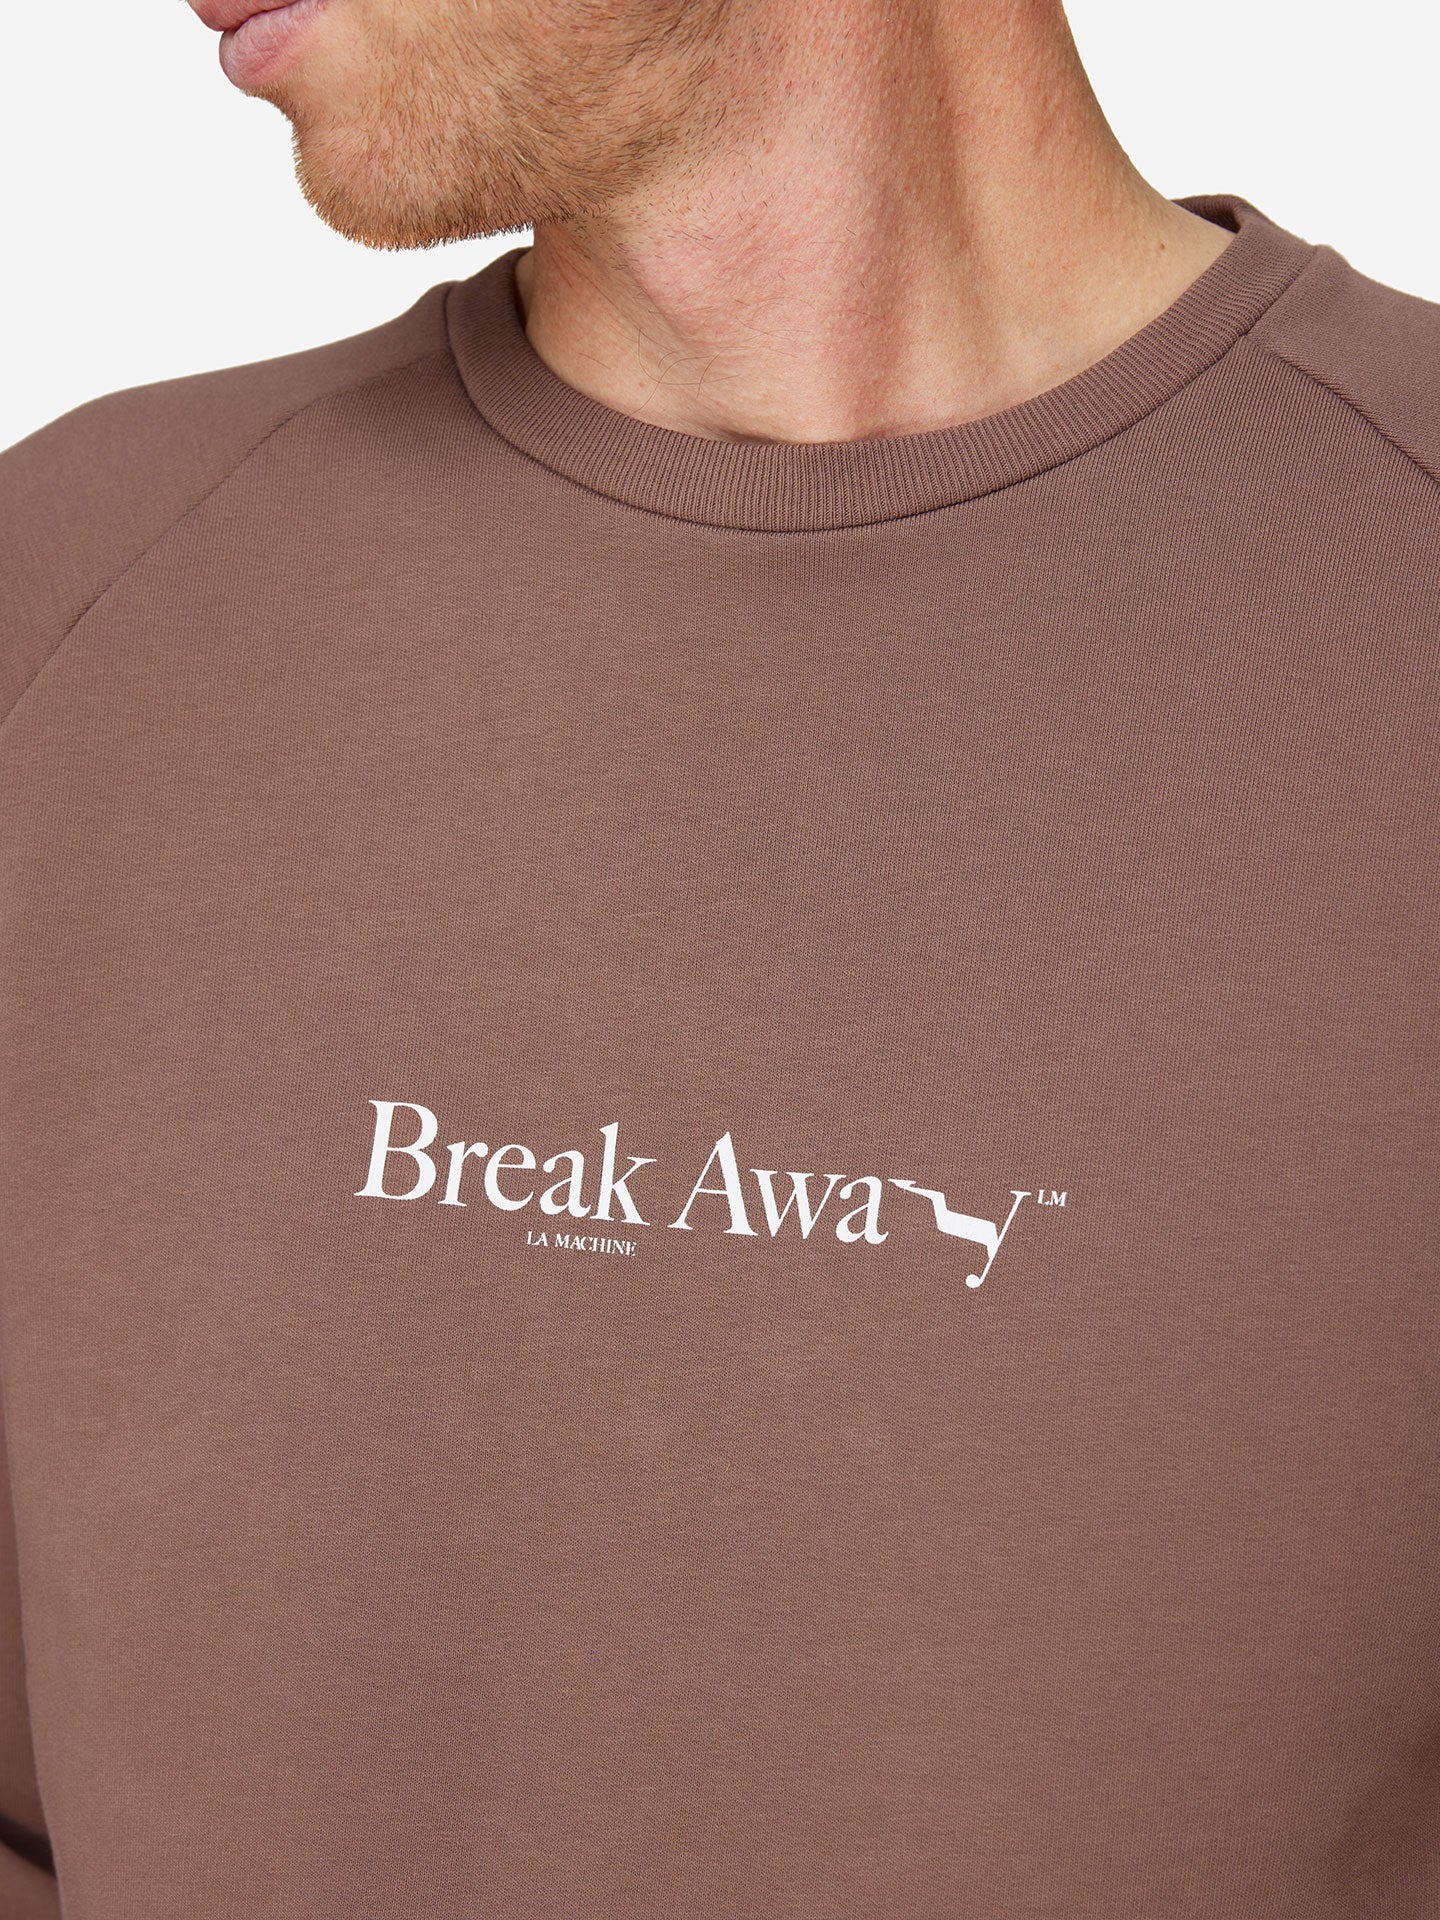 Break Away - Sweatshirt - La Machine Cycle Club